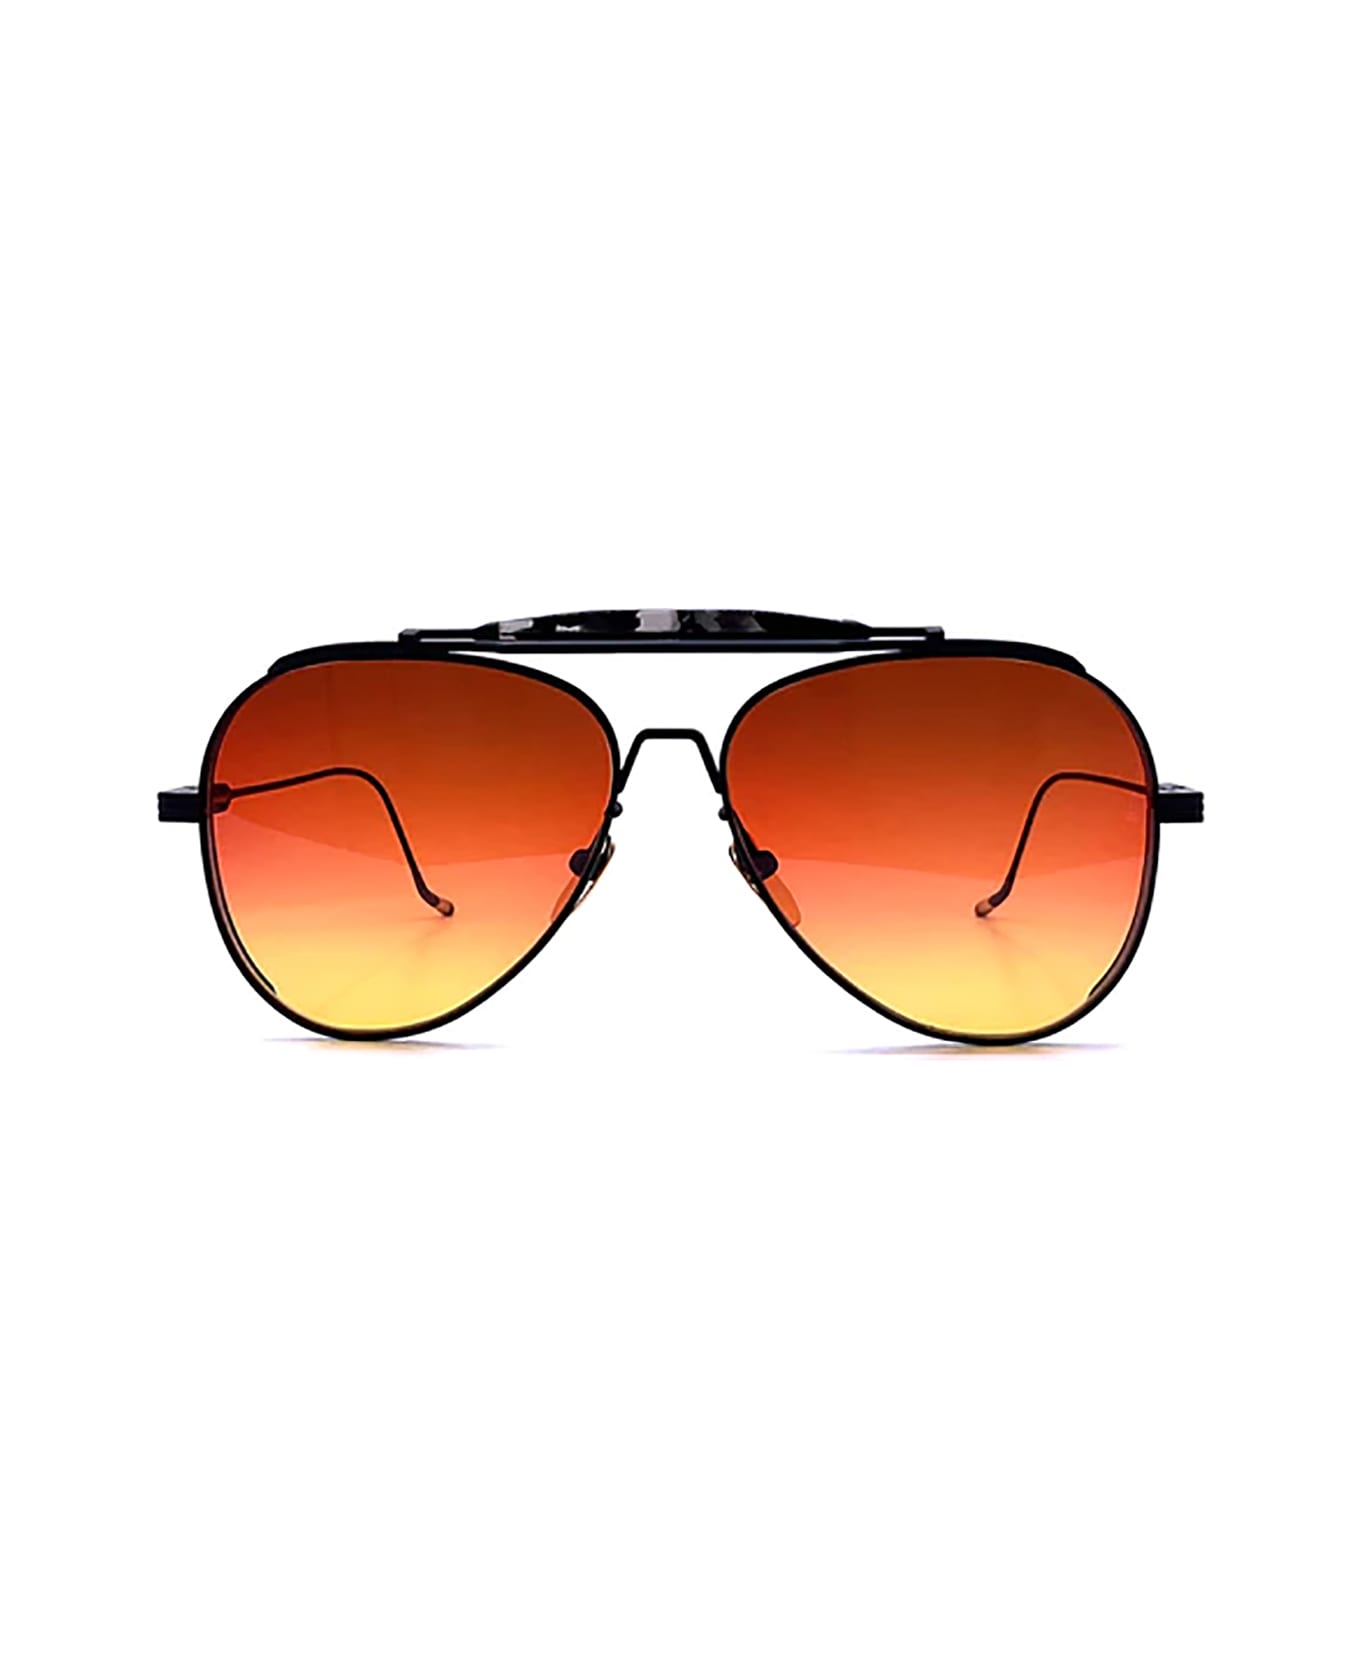 Jacques Marie Mage GONZO PEYOTE 2 Sunglasses - U Tropic Gradient